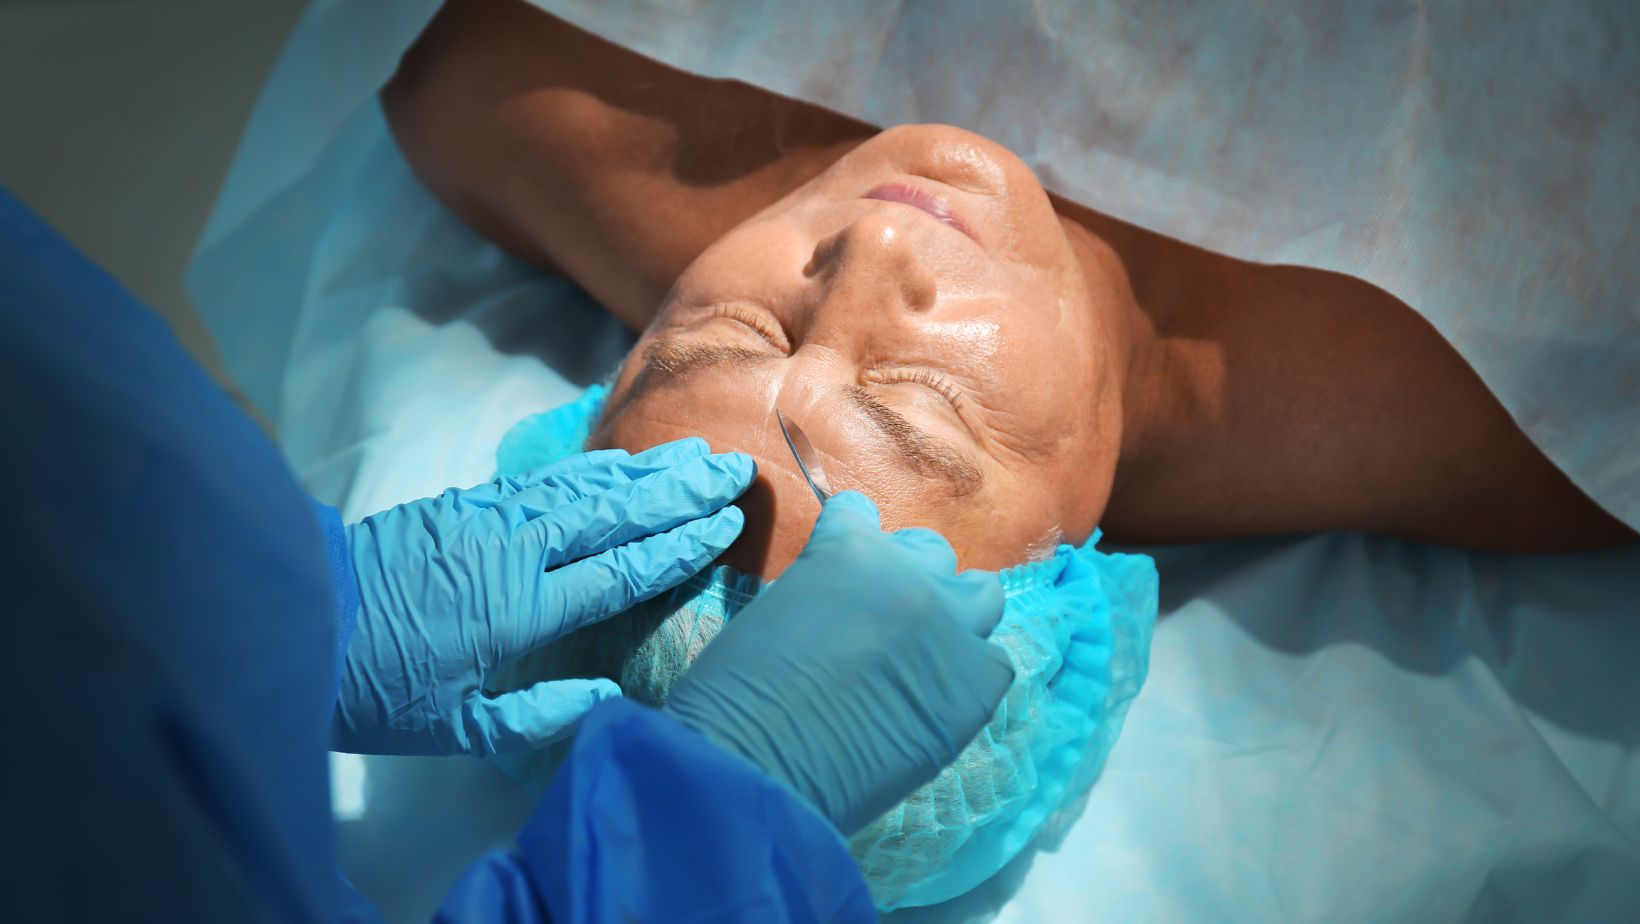 Cirugías estéticas certificadas: ¿Garantía de seguridad o ilusión mortal?